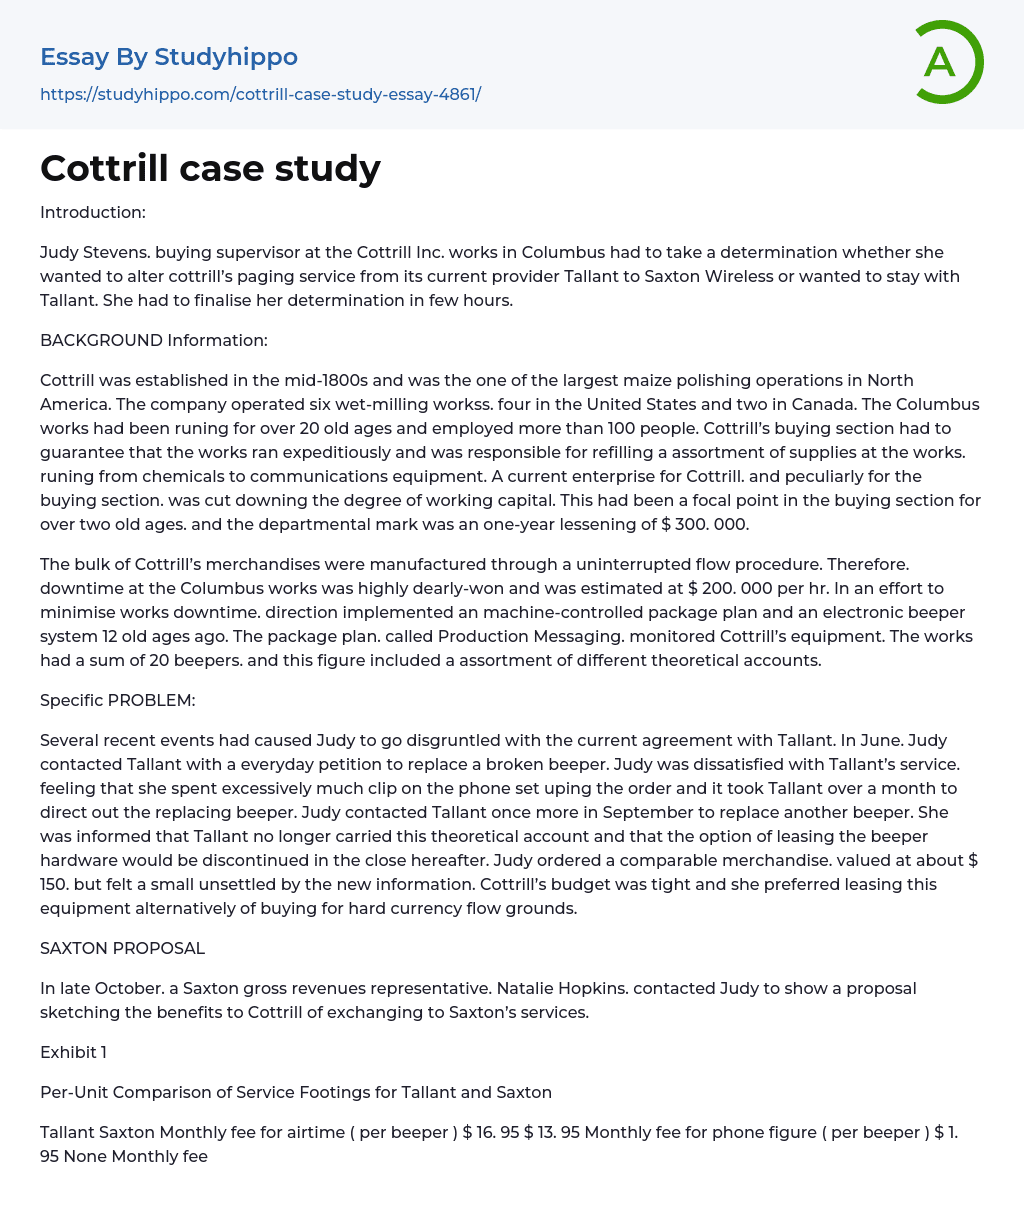 Cottrill case study Essay Example